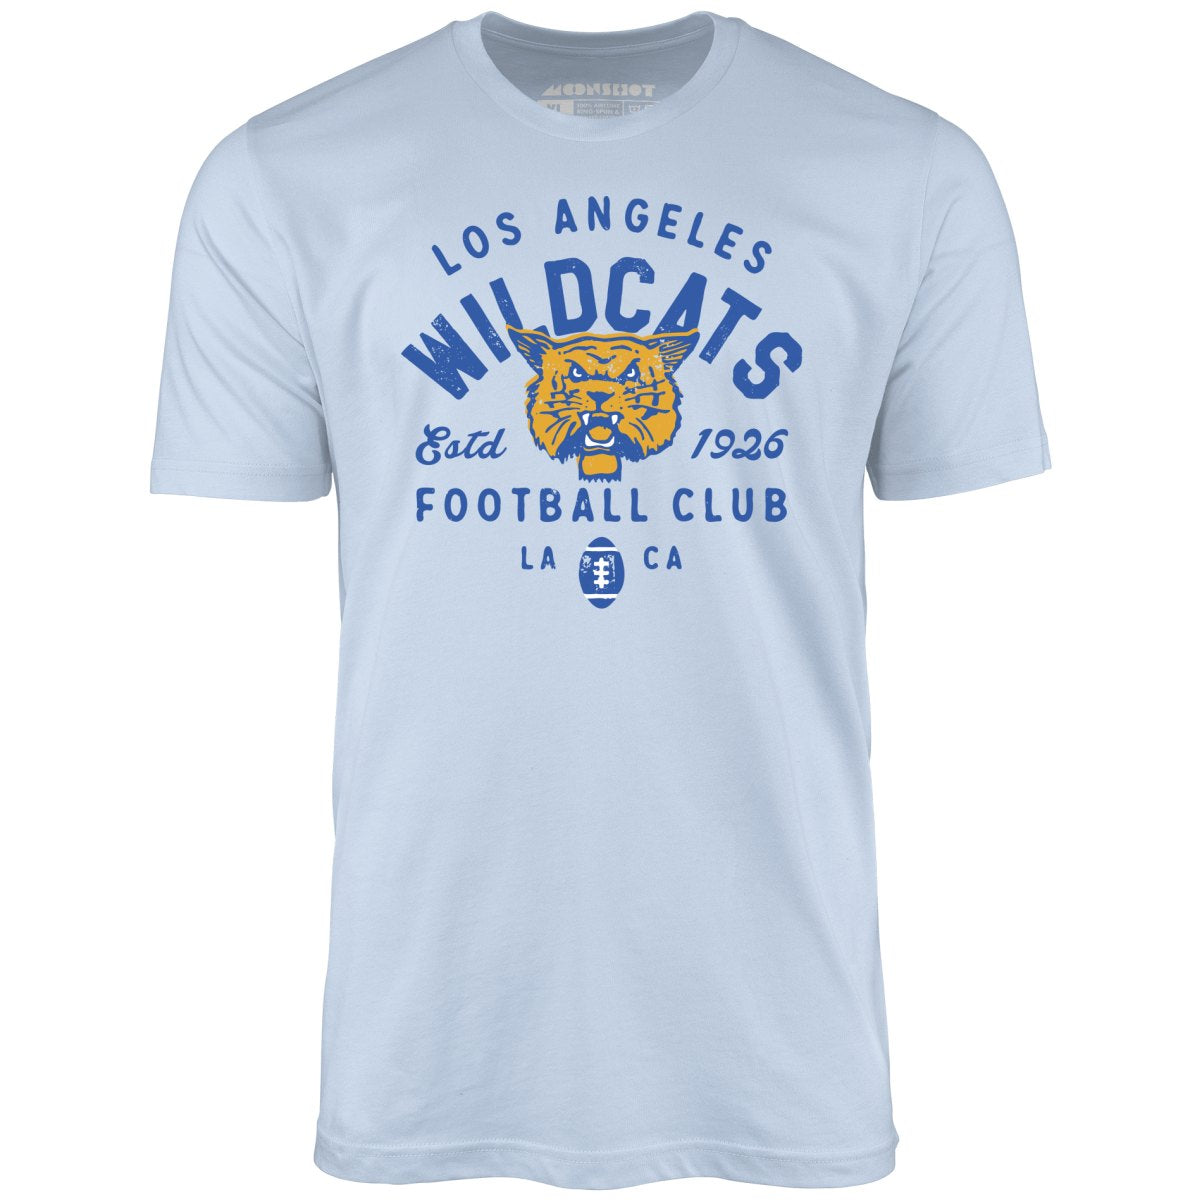 Los Angeles Wildcats - California - Vintage Defunct Football Teams - Unisex T-Shirt